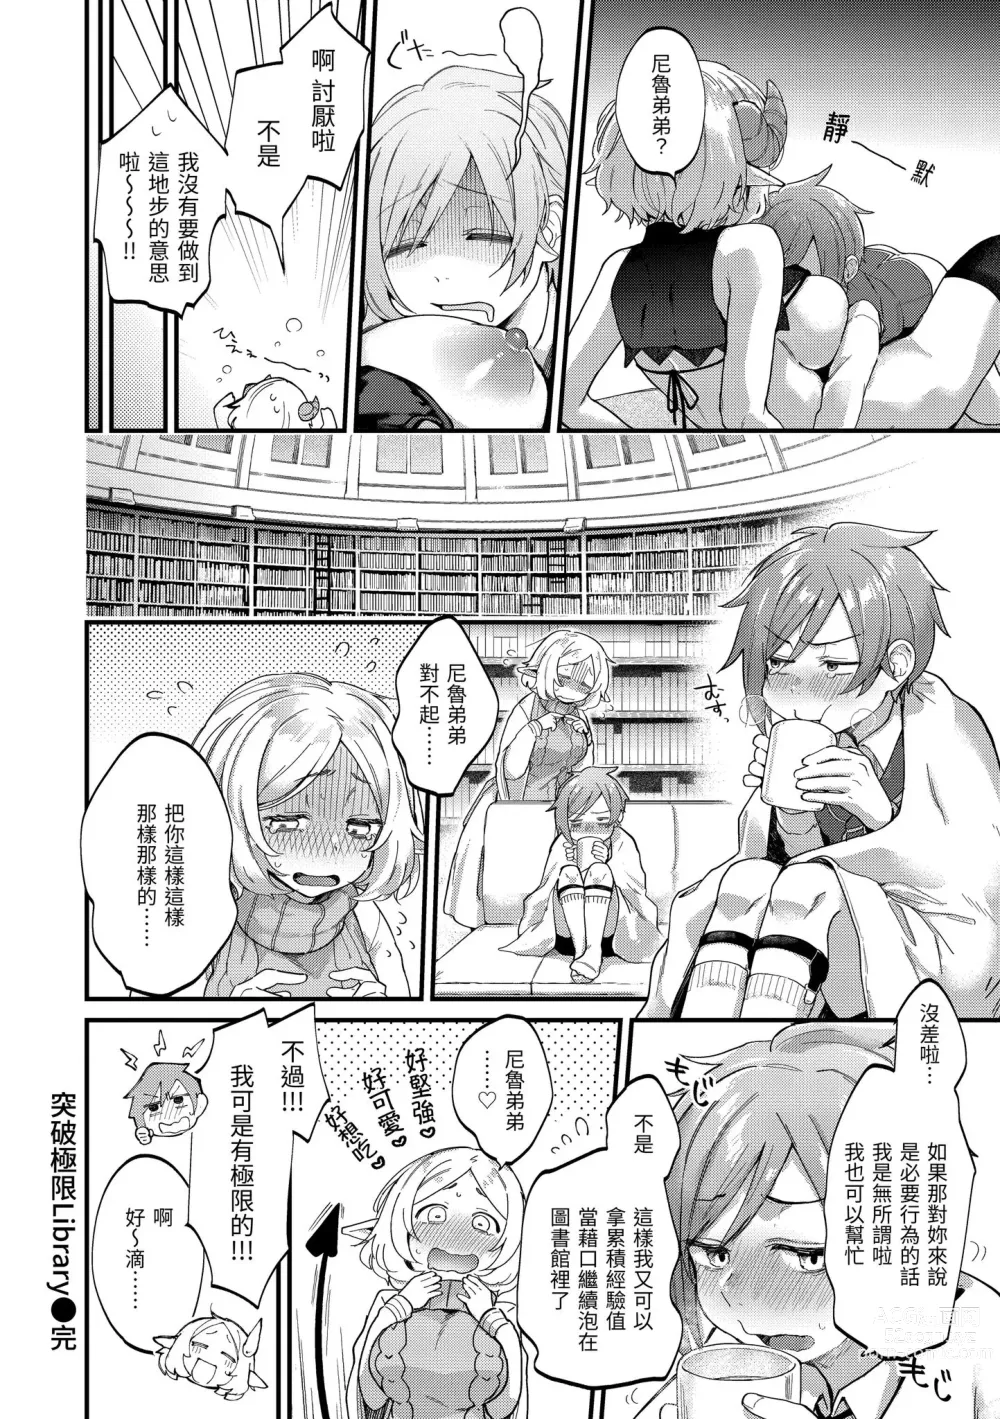 Page 178 of manga 直到你明白什麼是喜歡